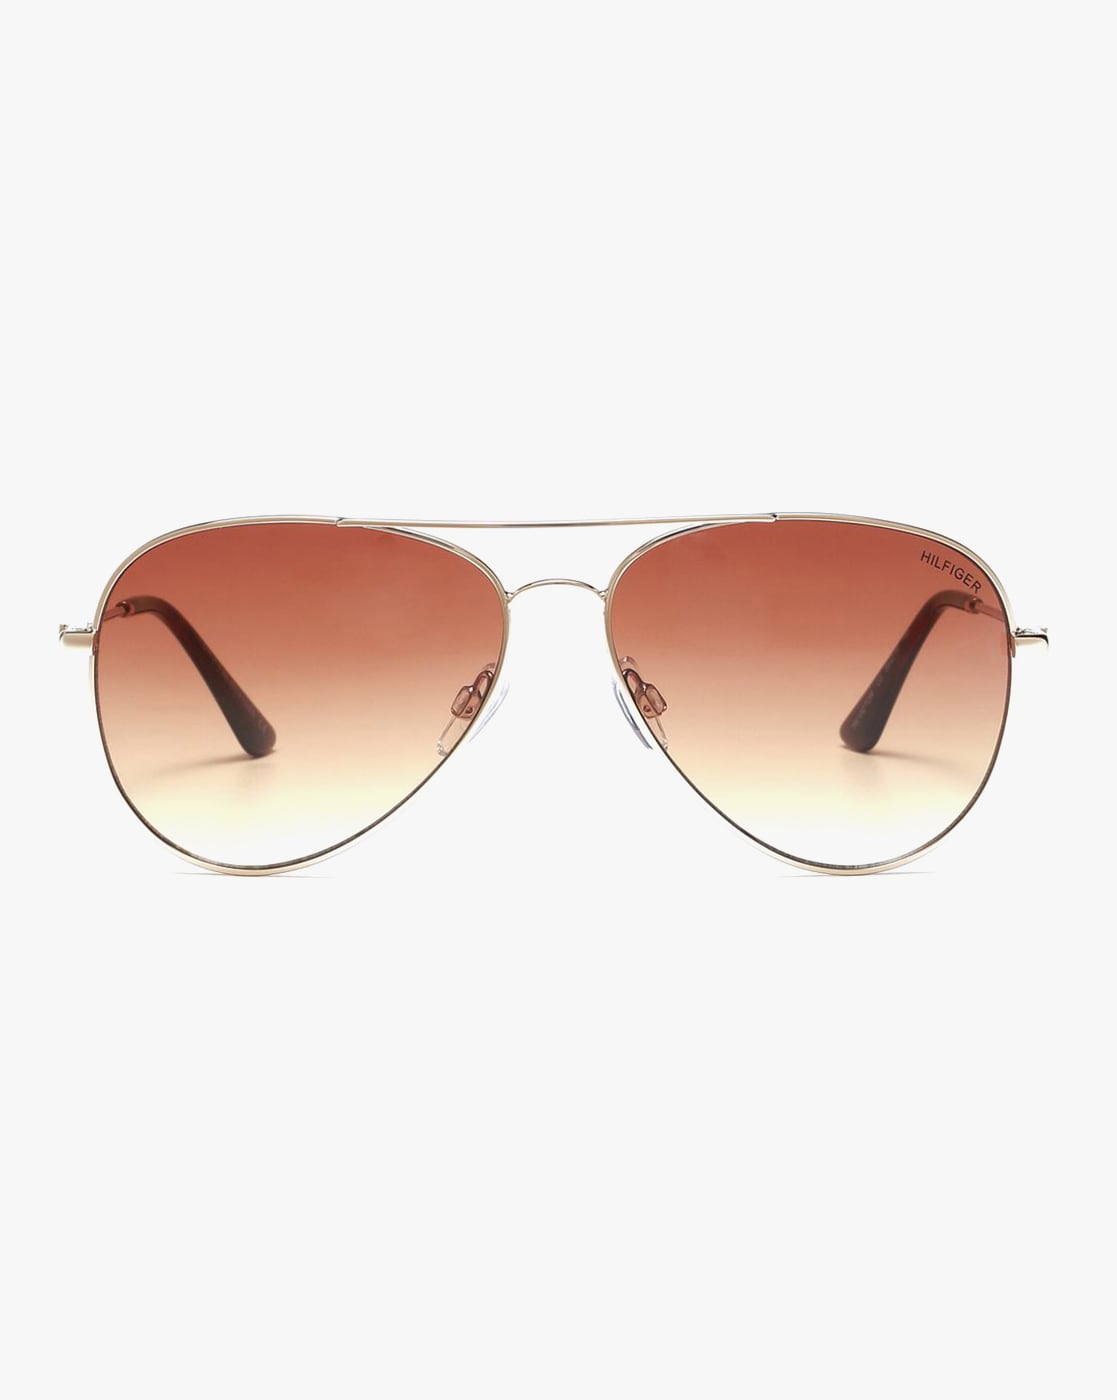 Buy Gold Sunglasses for Men by TOMMY HILFIGER Online 